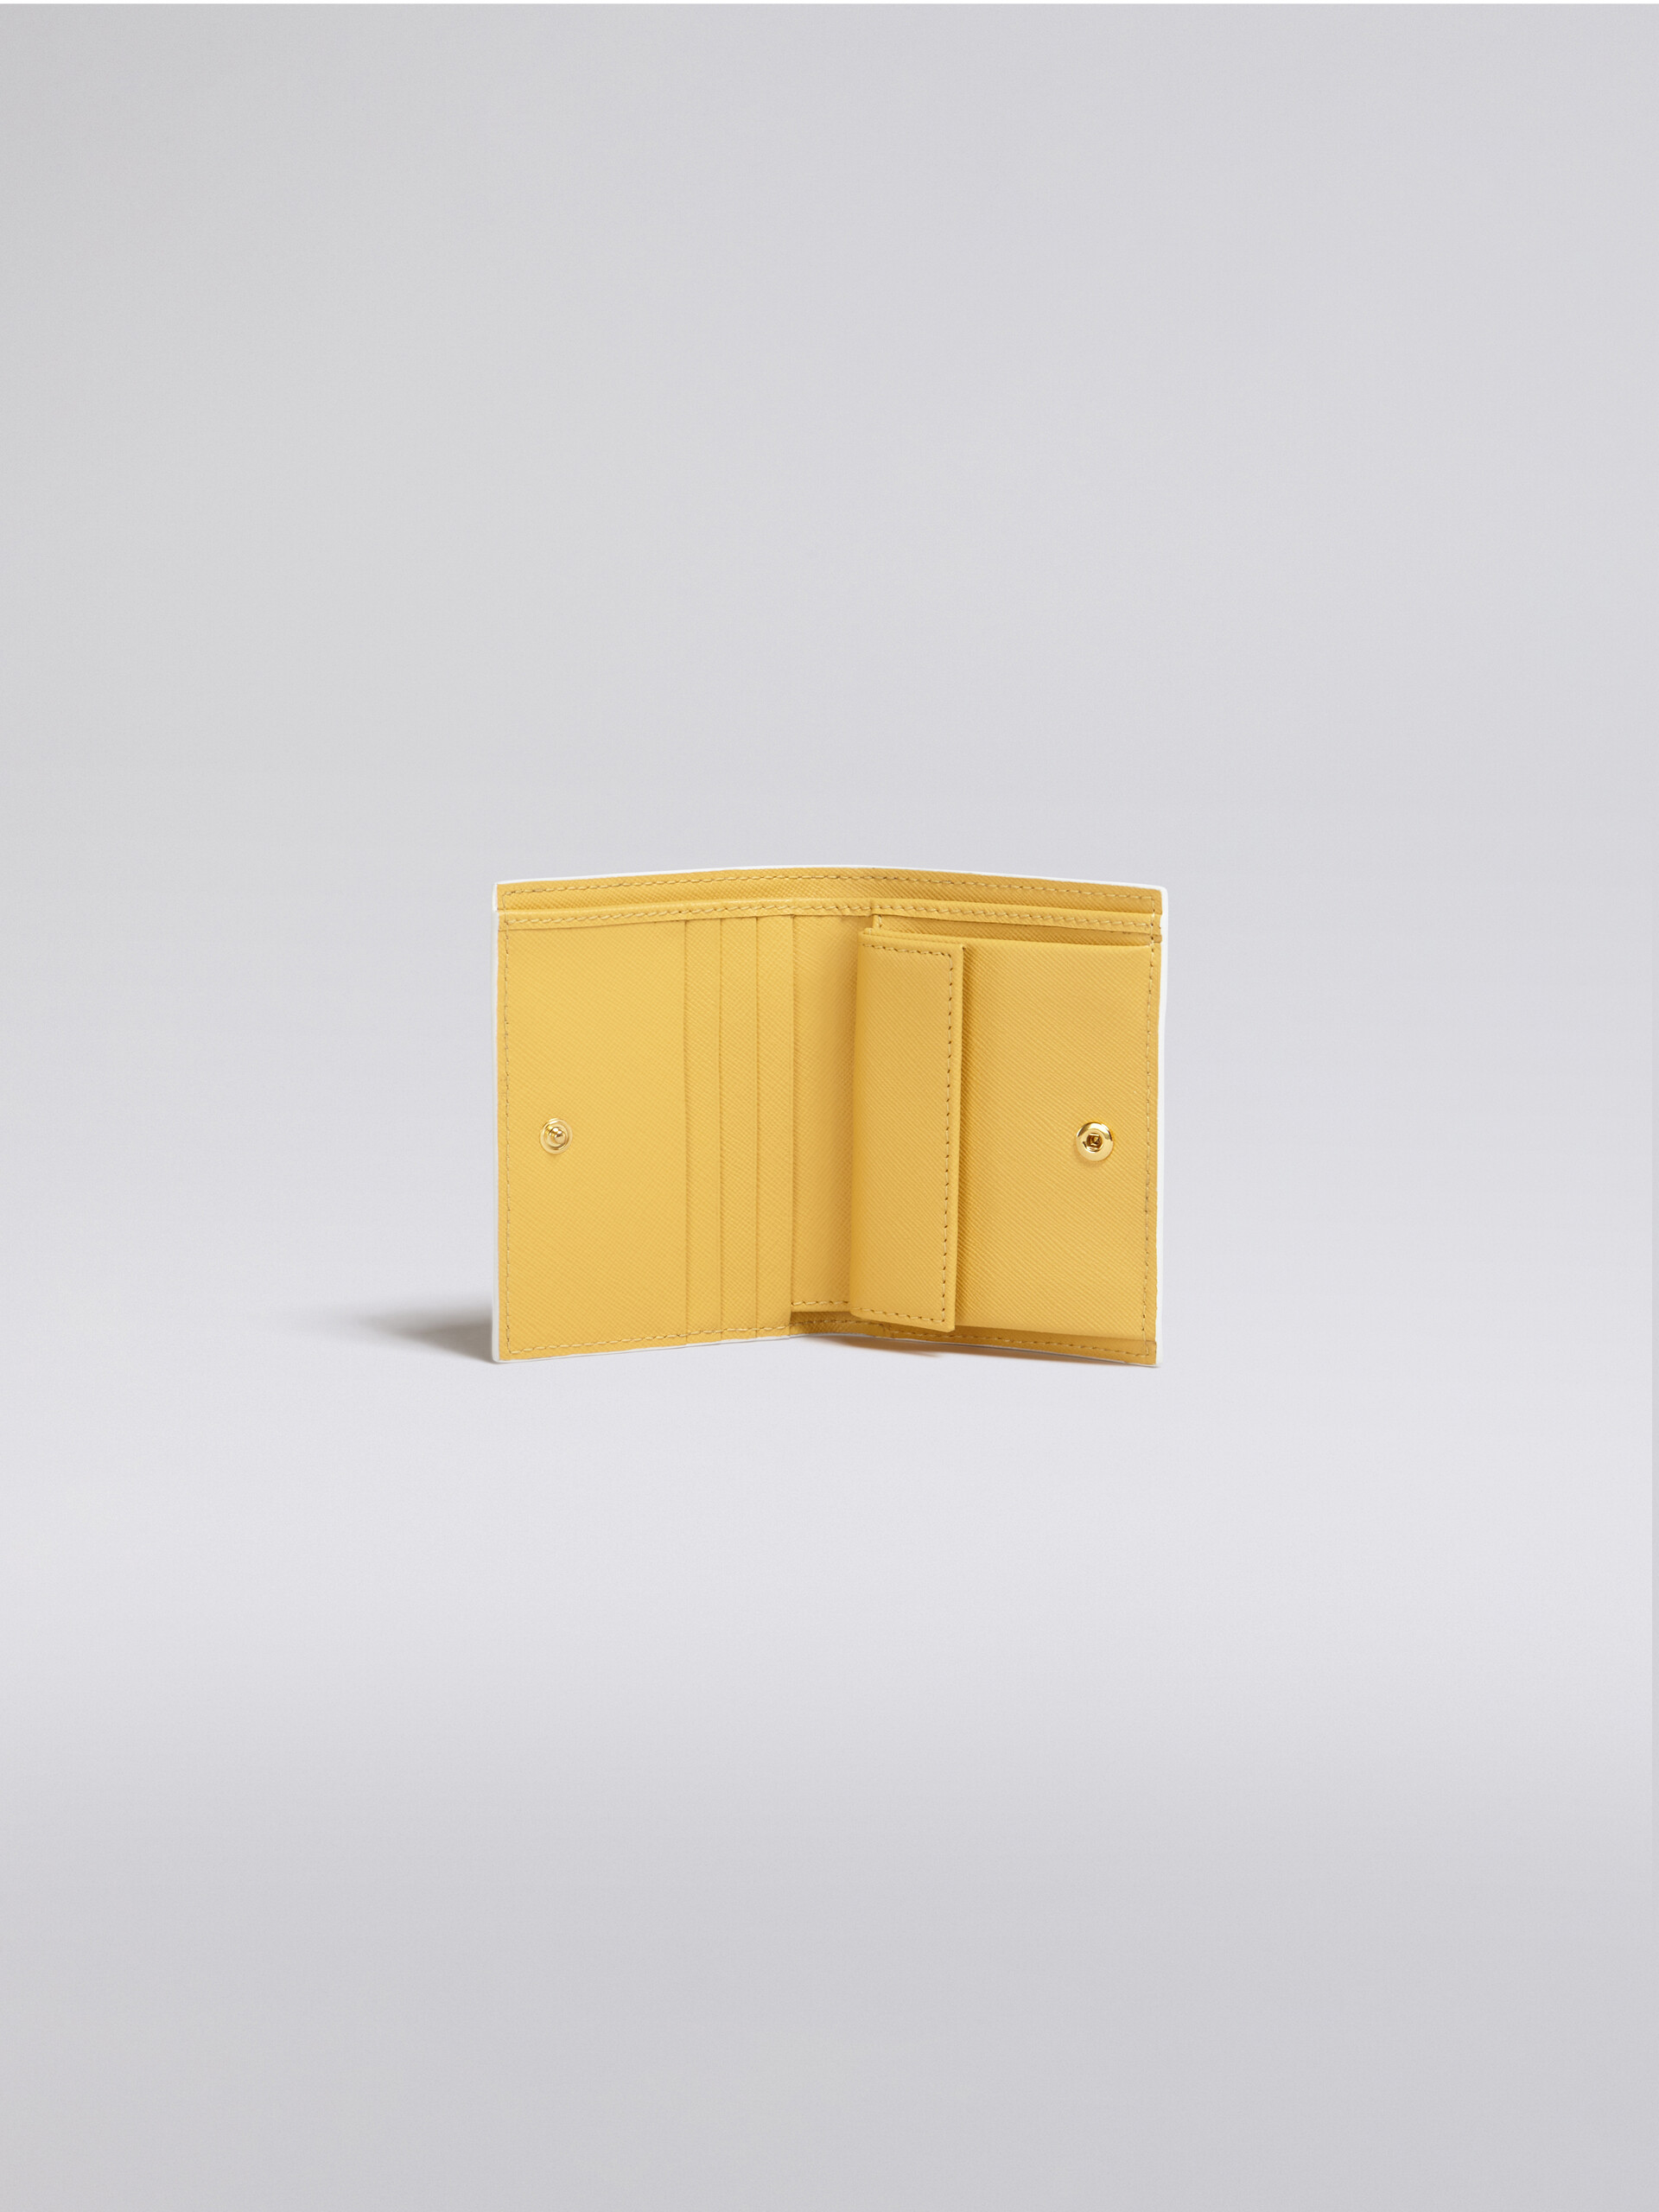 Yellow saffiano leather bi-fold wallet - Wallets - Image 2